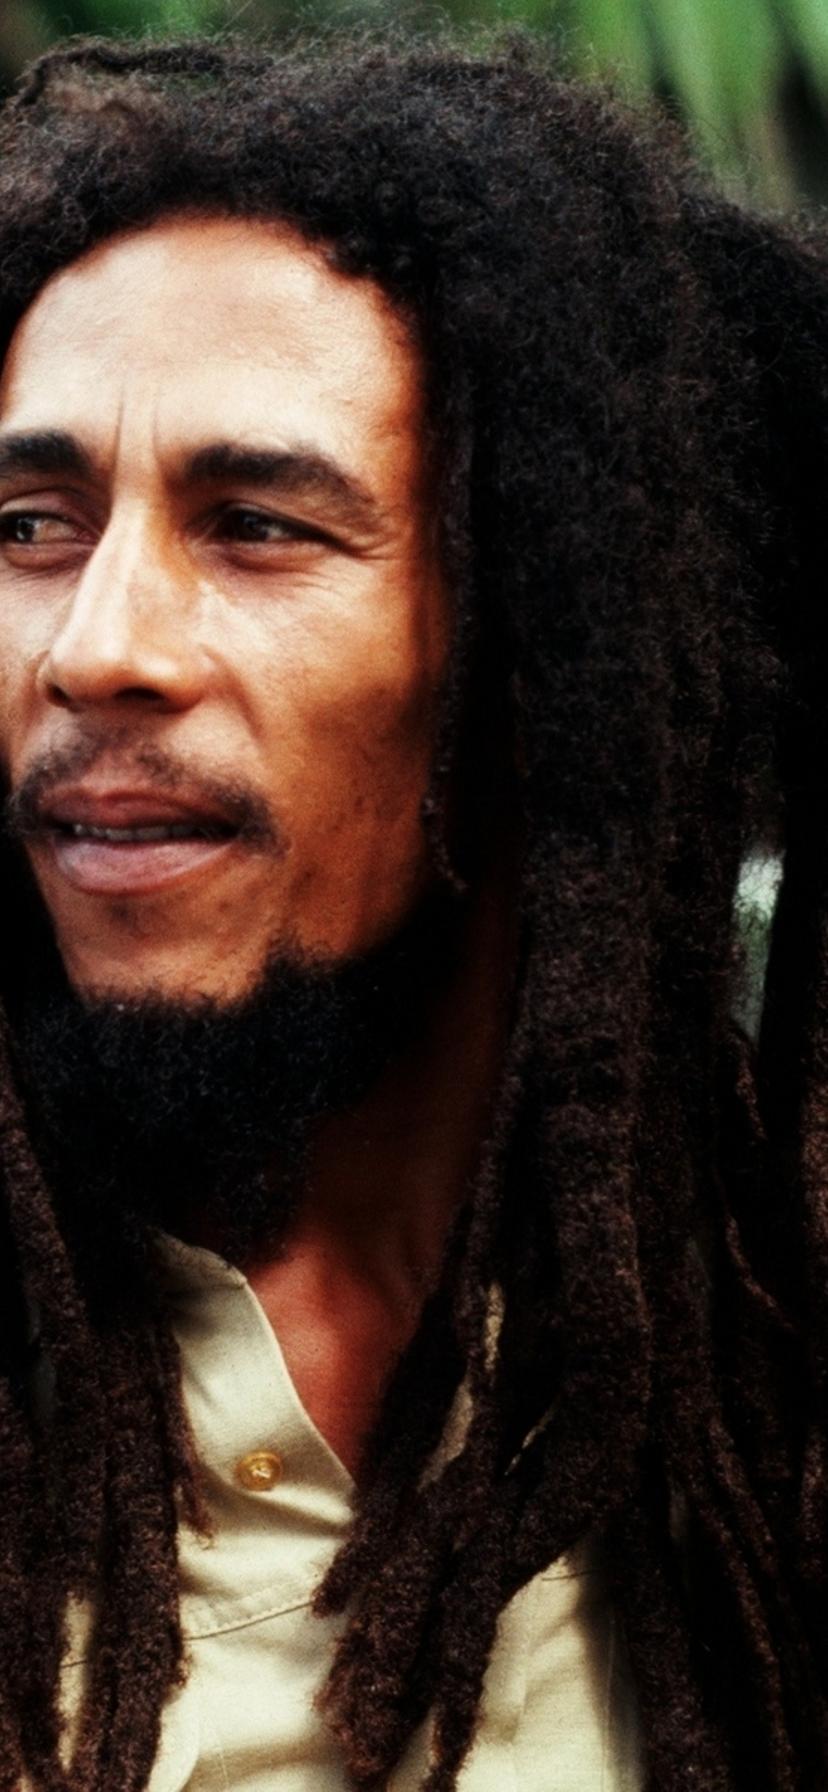 The amazing Bob Marley